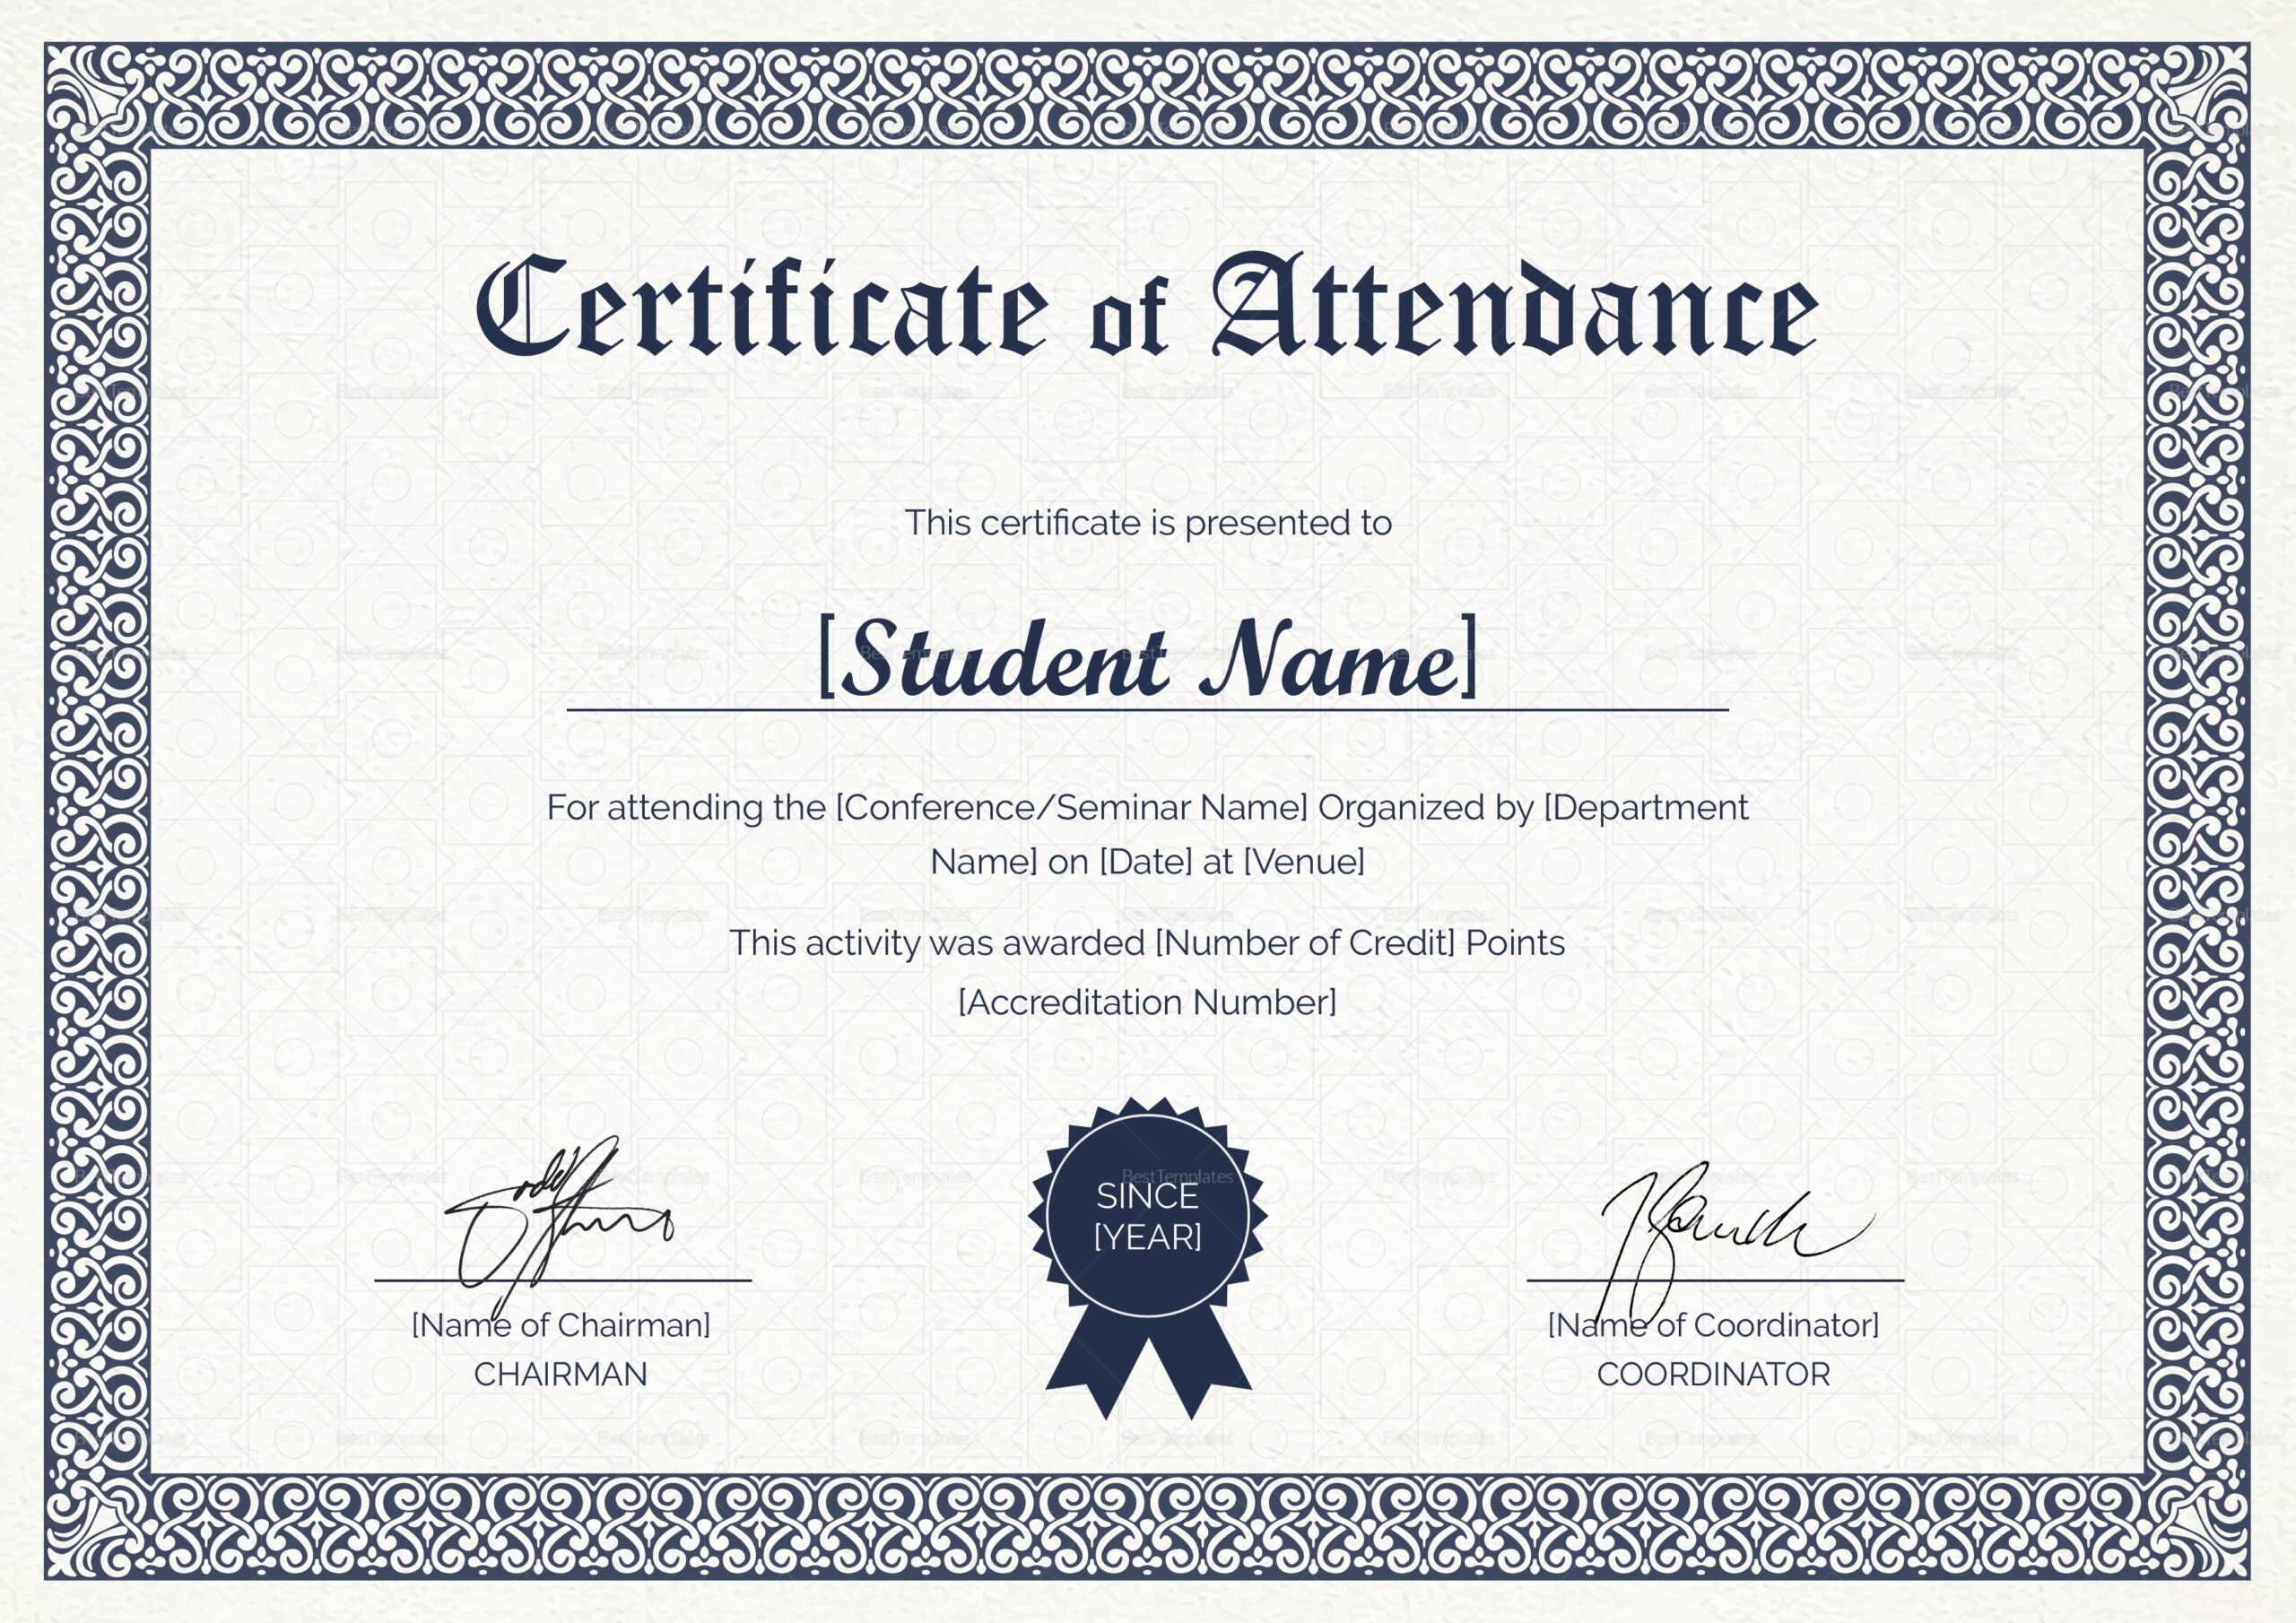 Students Attendance Certificate Template Regarding Certificate Of Attendance Conference Template